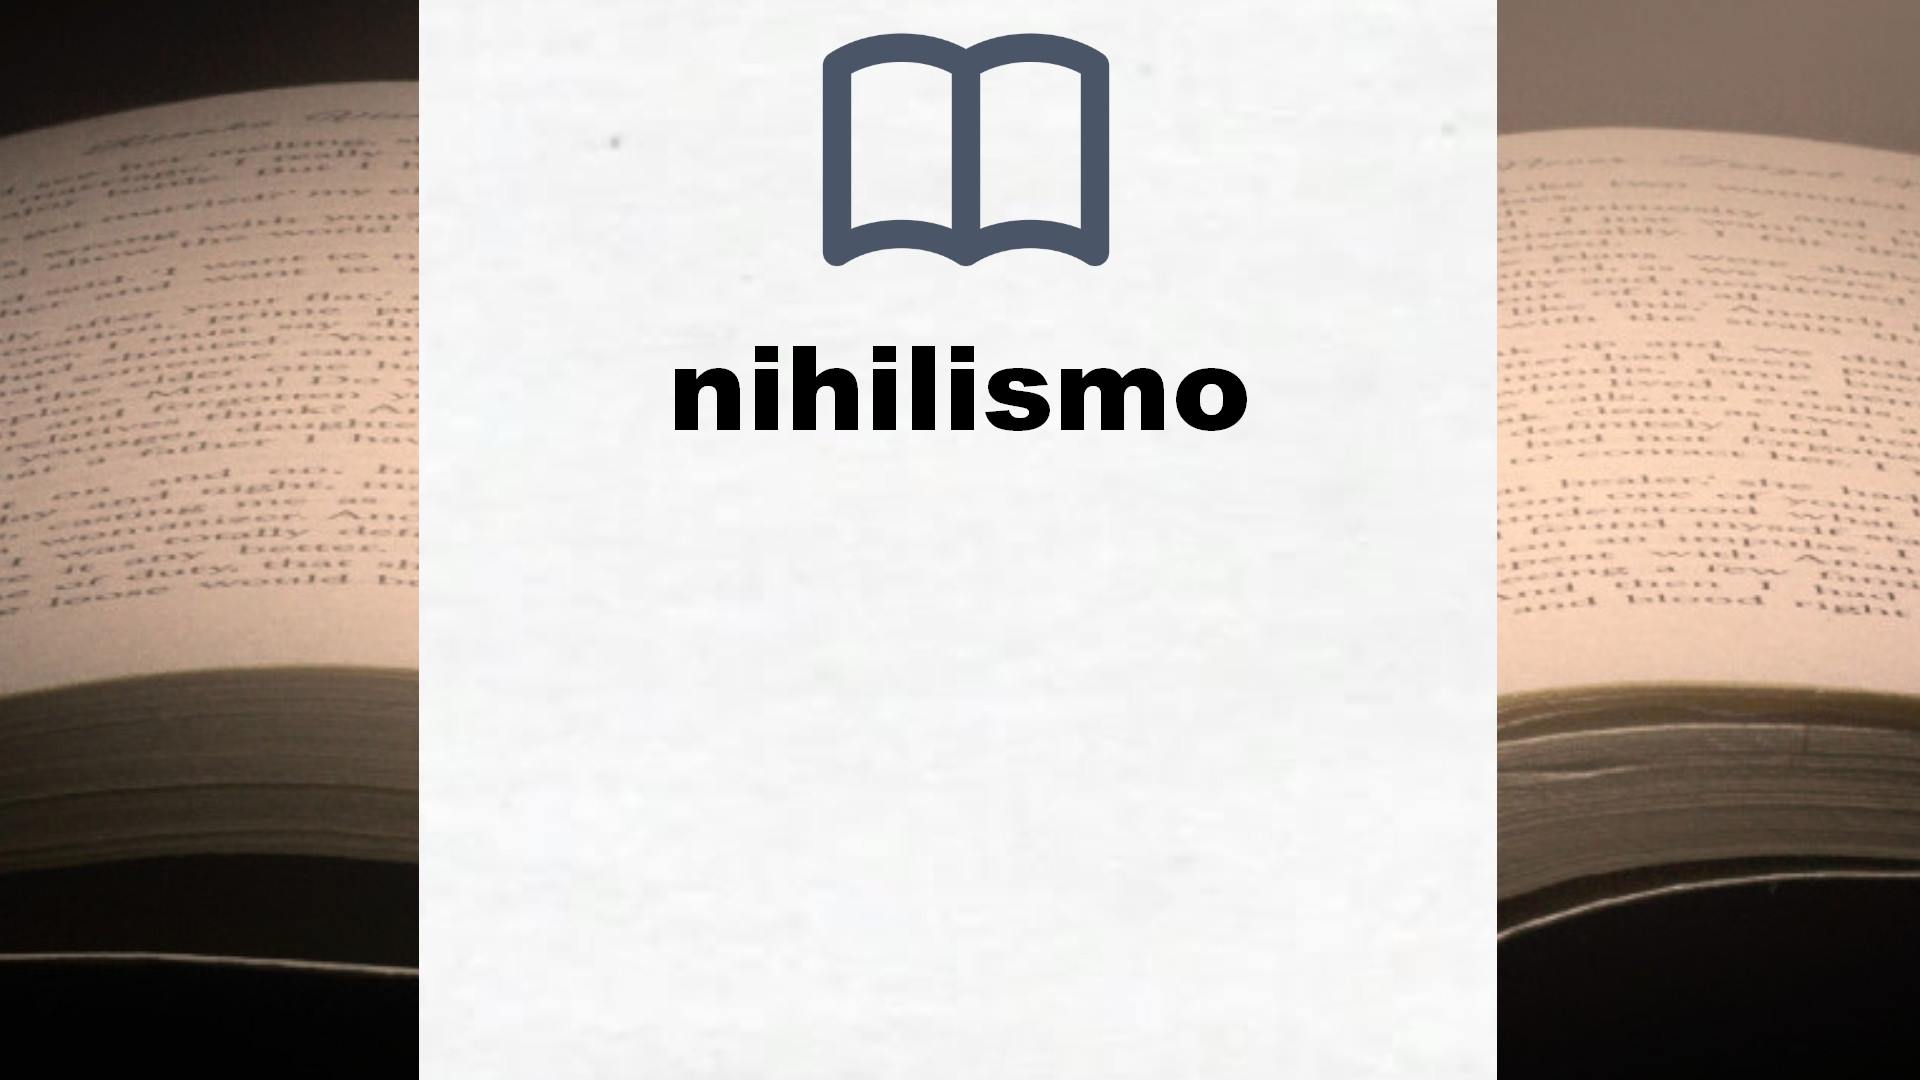 Libros sobre nihilismo